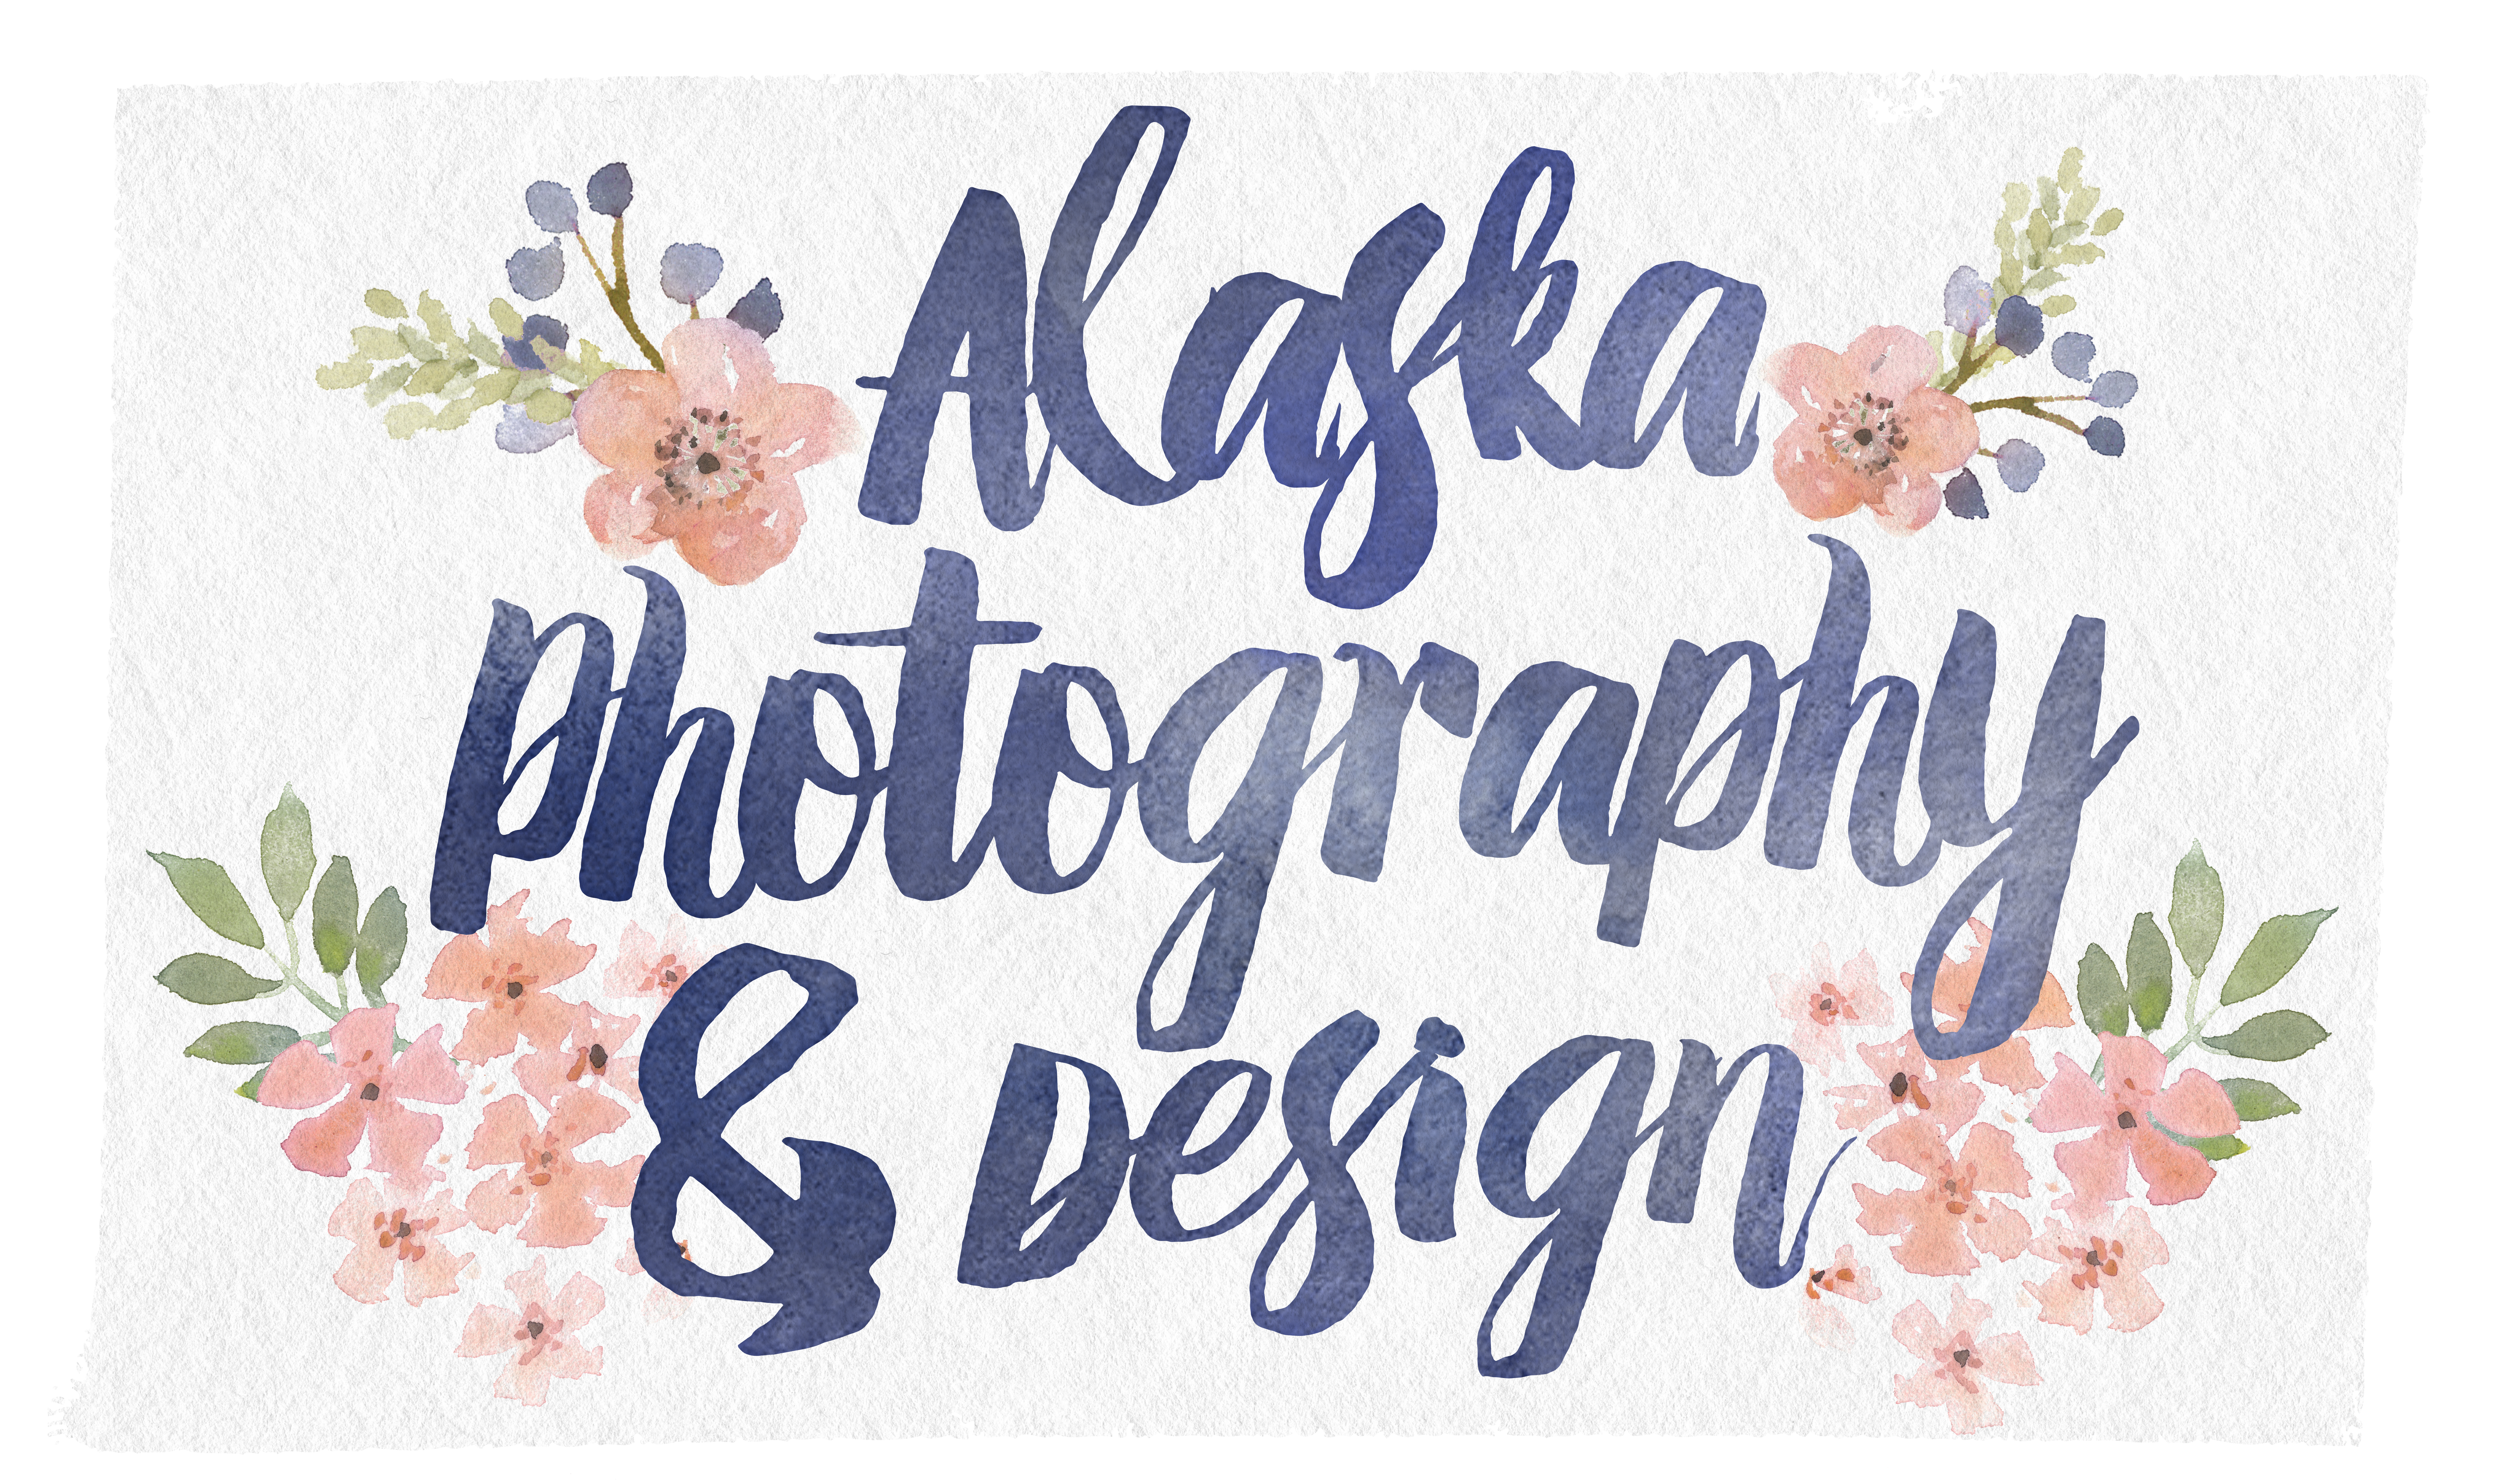 Alaska Photography Design